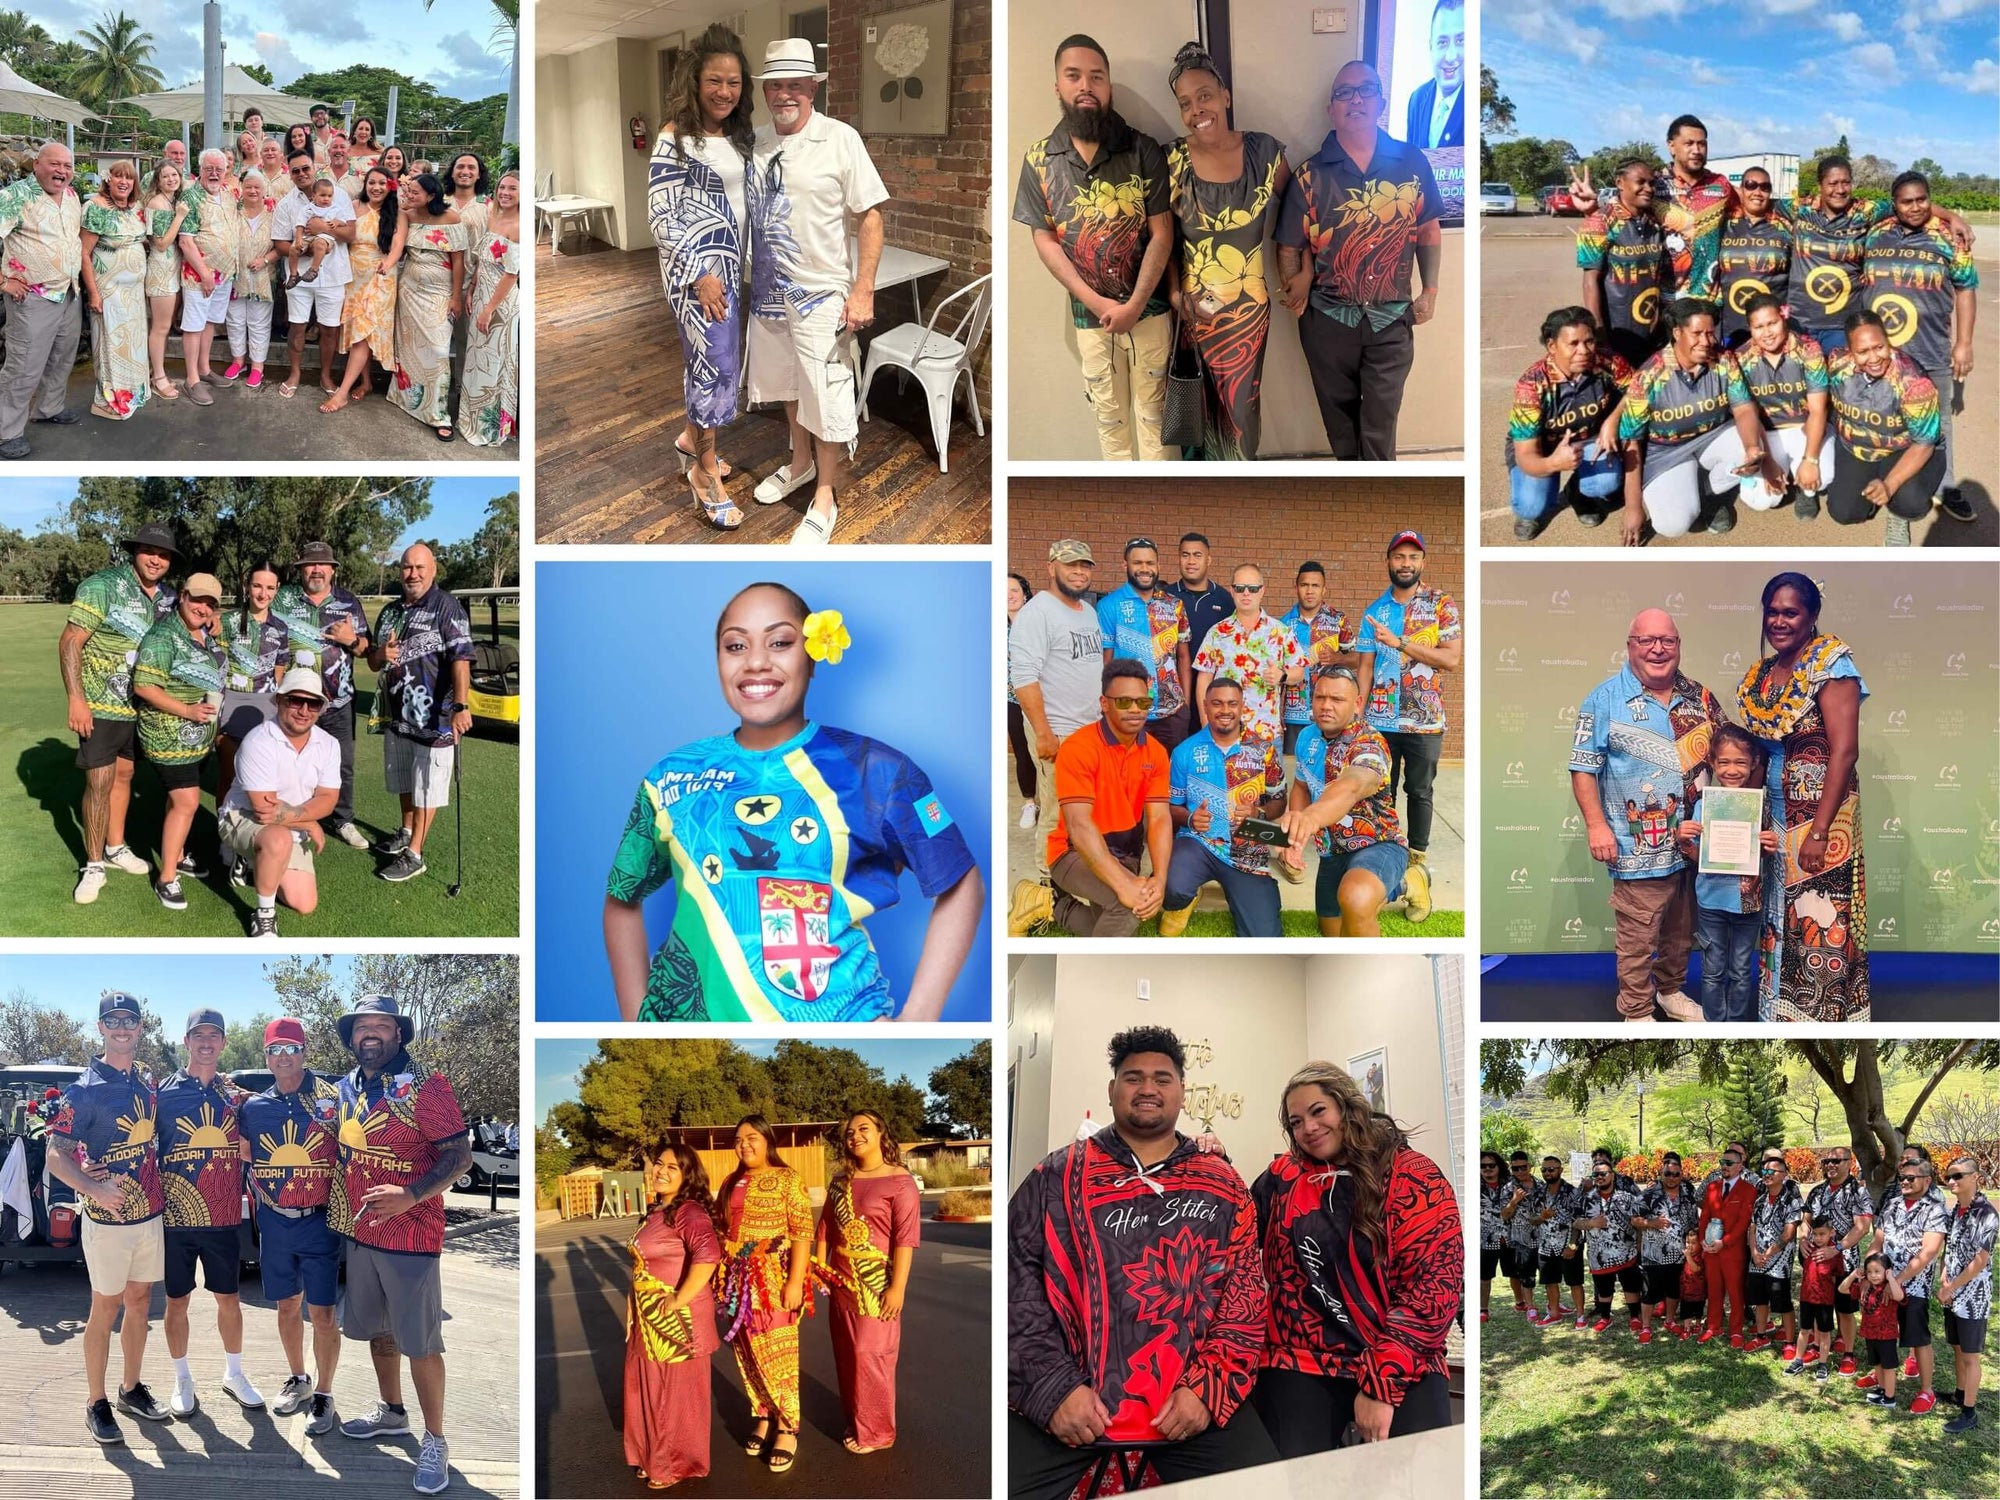 THE POLYNESIAN PRIDE COMMUNITY - Polynesian Pride